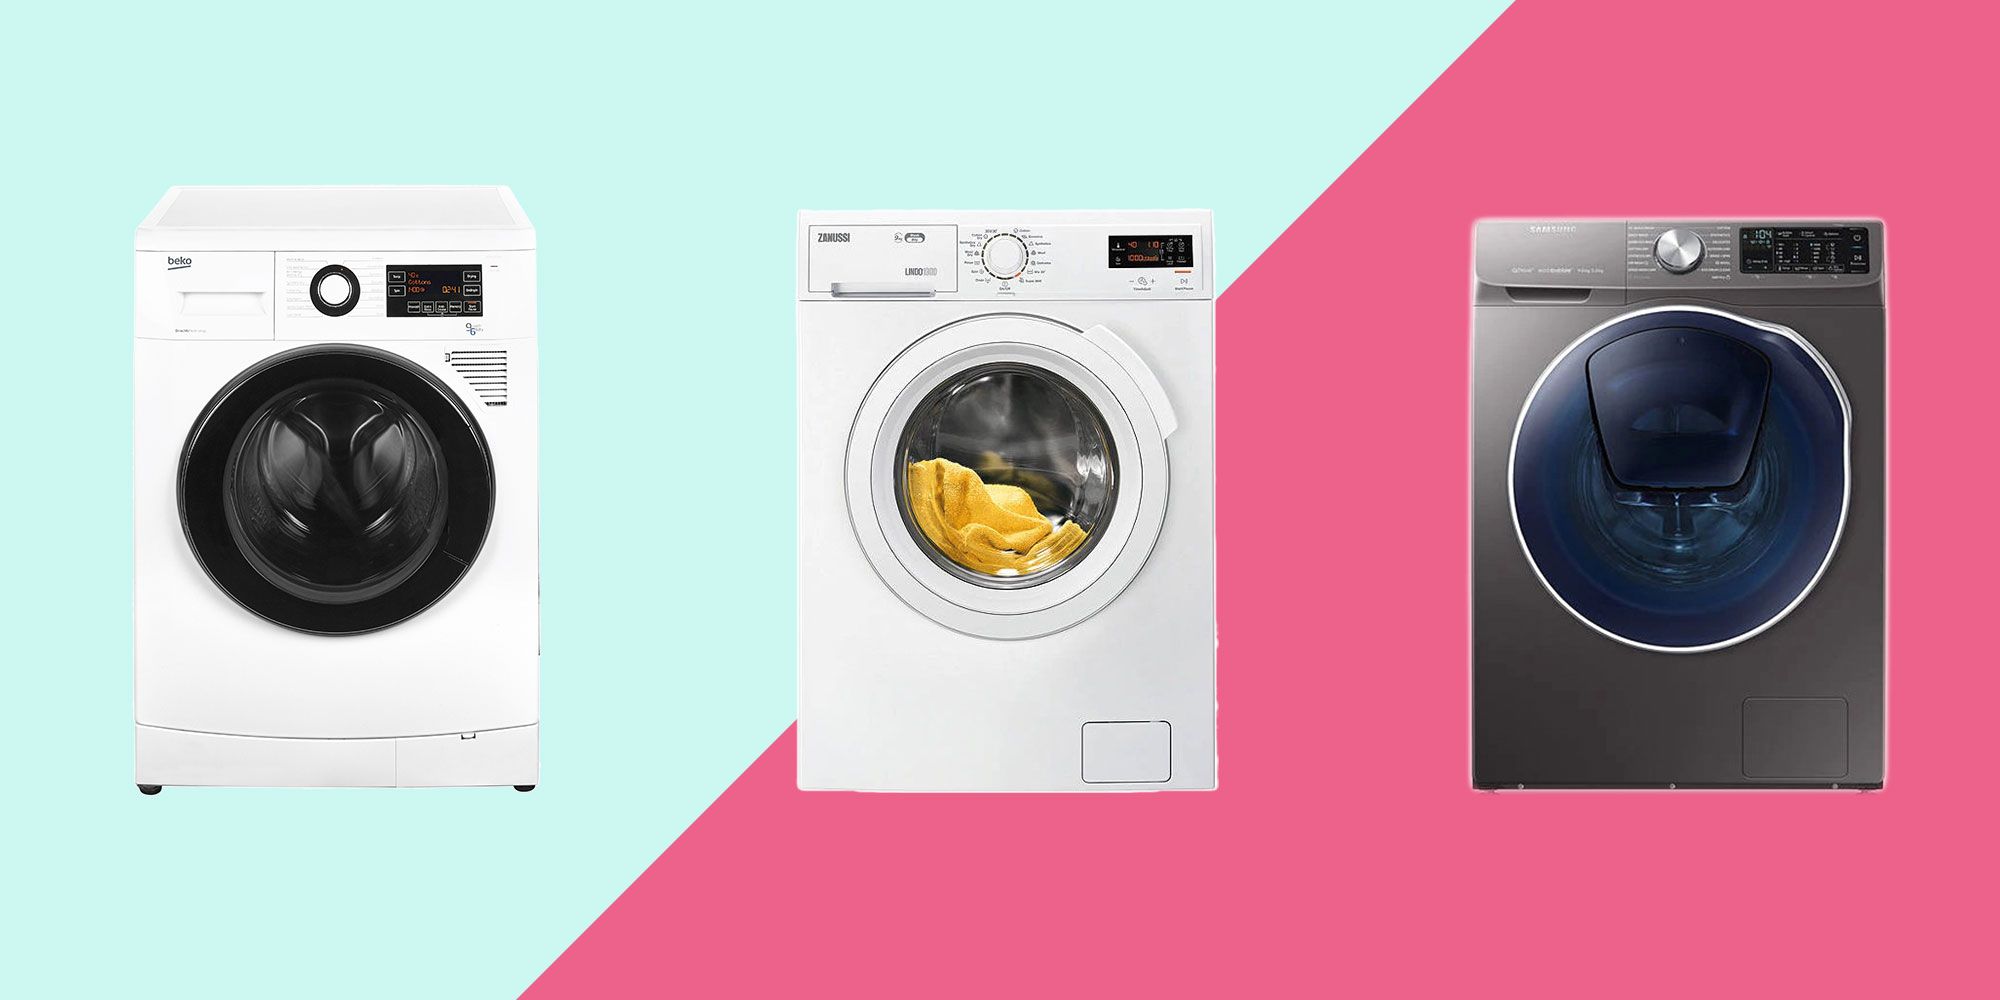 lowes-washer-dryer-deals-wholesale-save-55-jlcatj-gob-mx